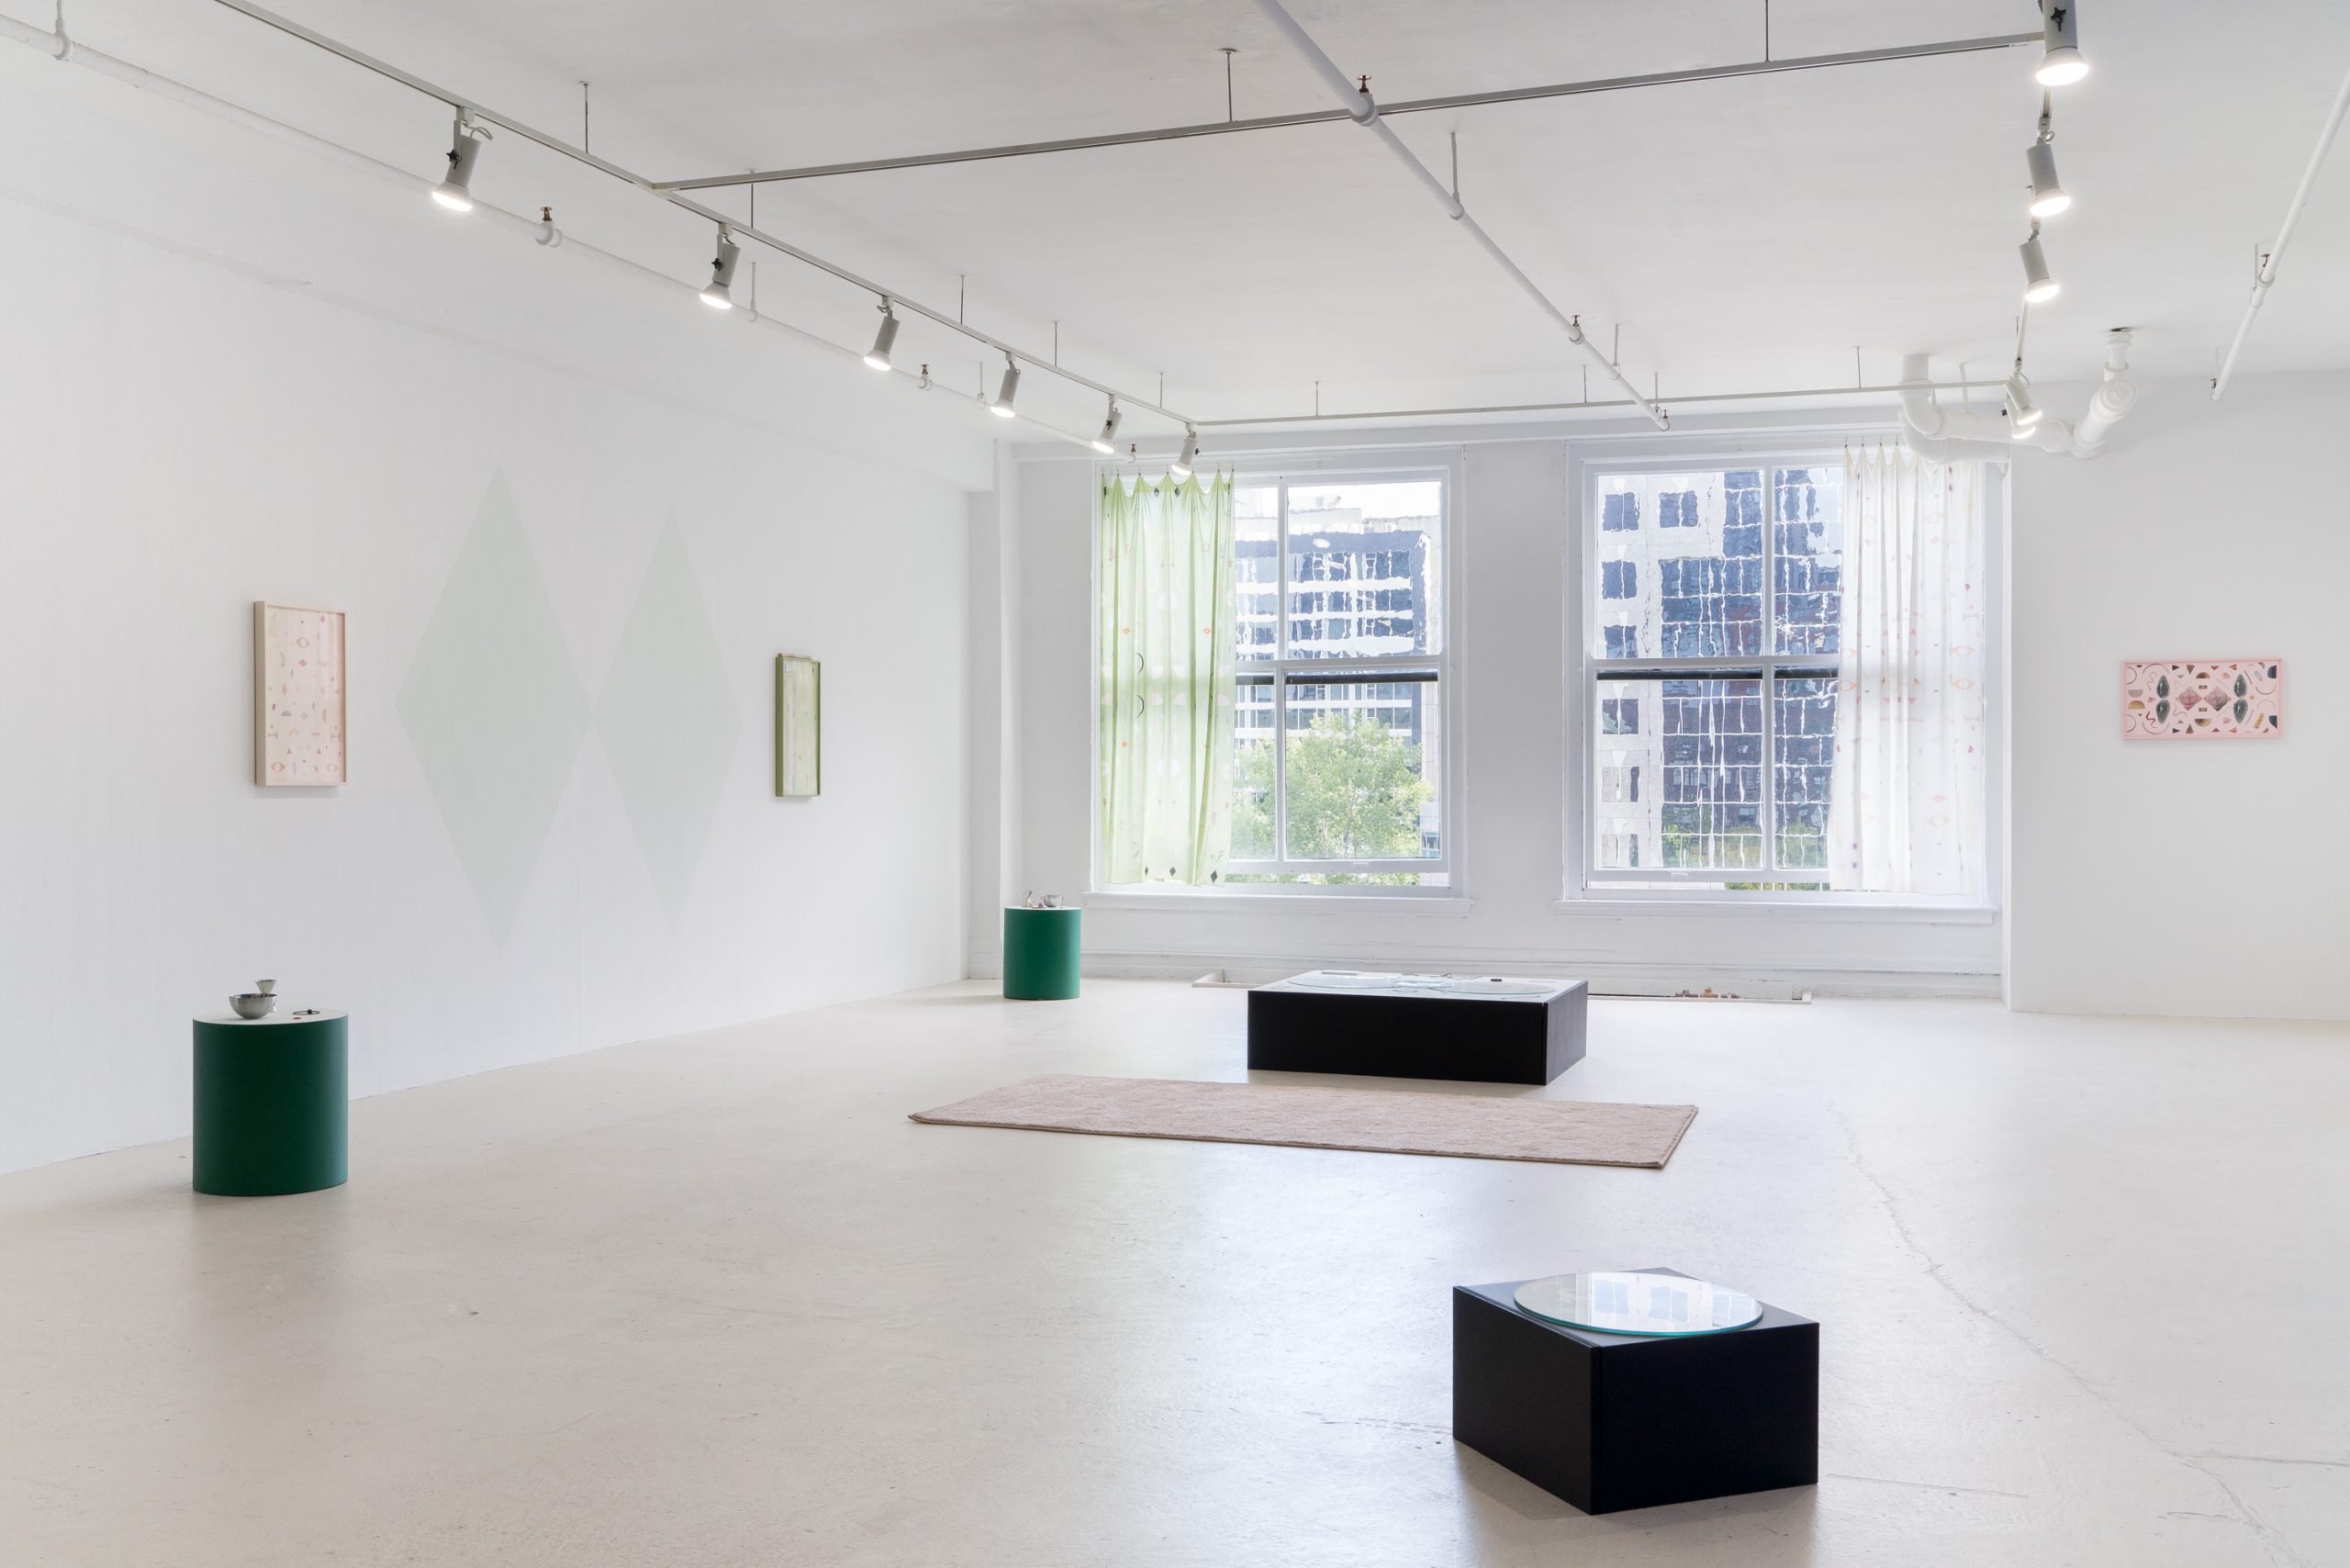 Galerie B-312, MOMENTA 2019, Jean-Michael Seminaro